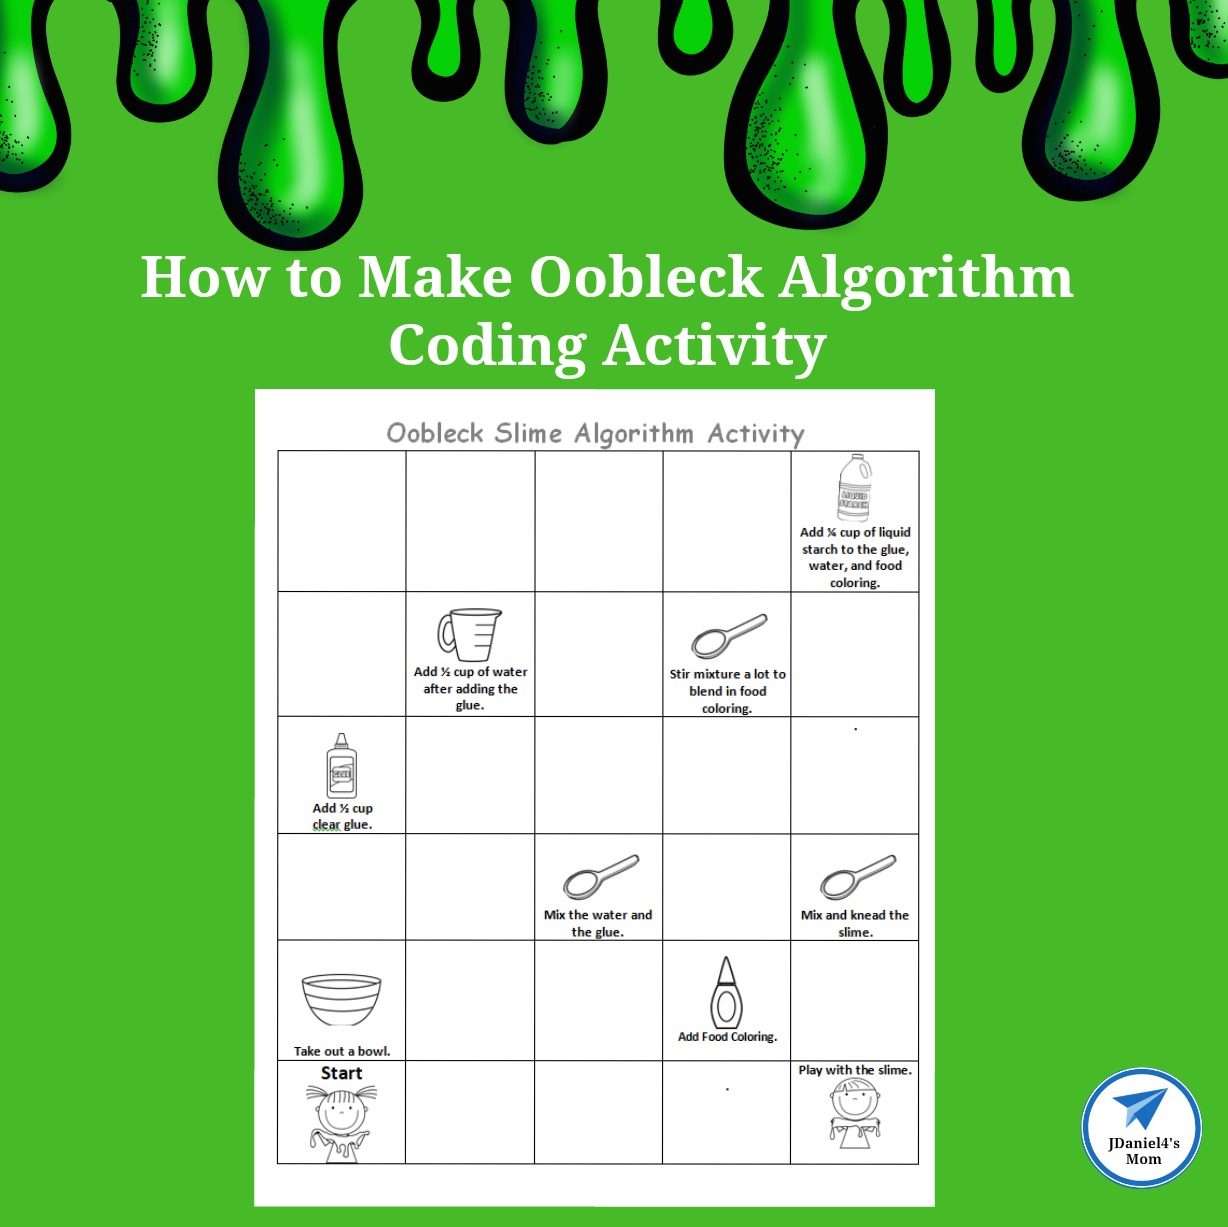 how-to-make-oobleck-algorithm-coding-activity-jdaniel4s-mom